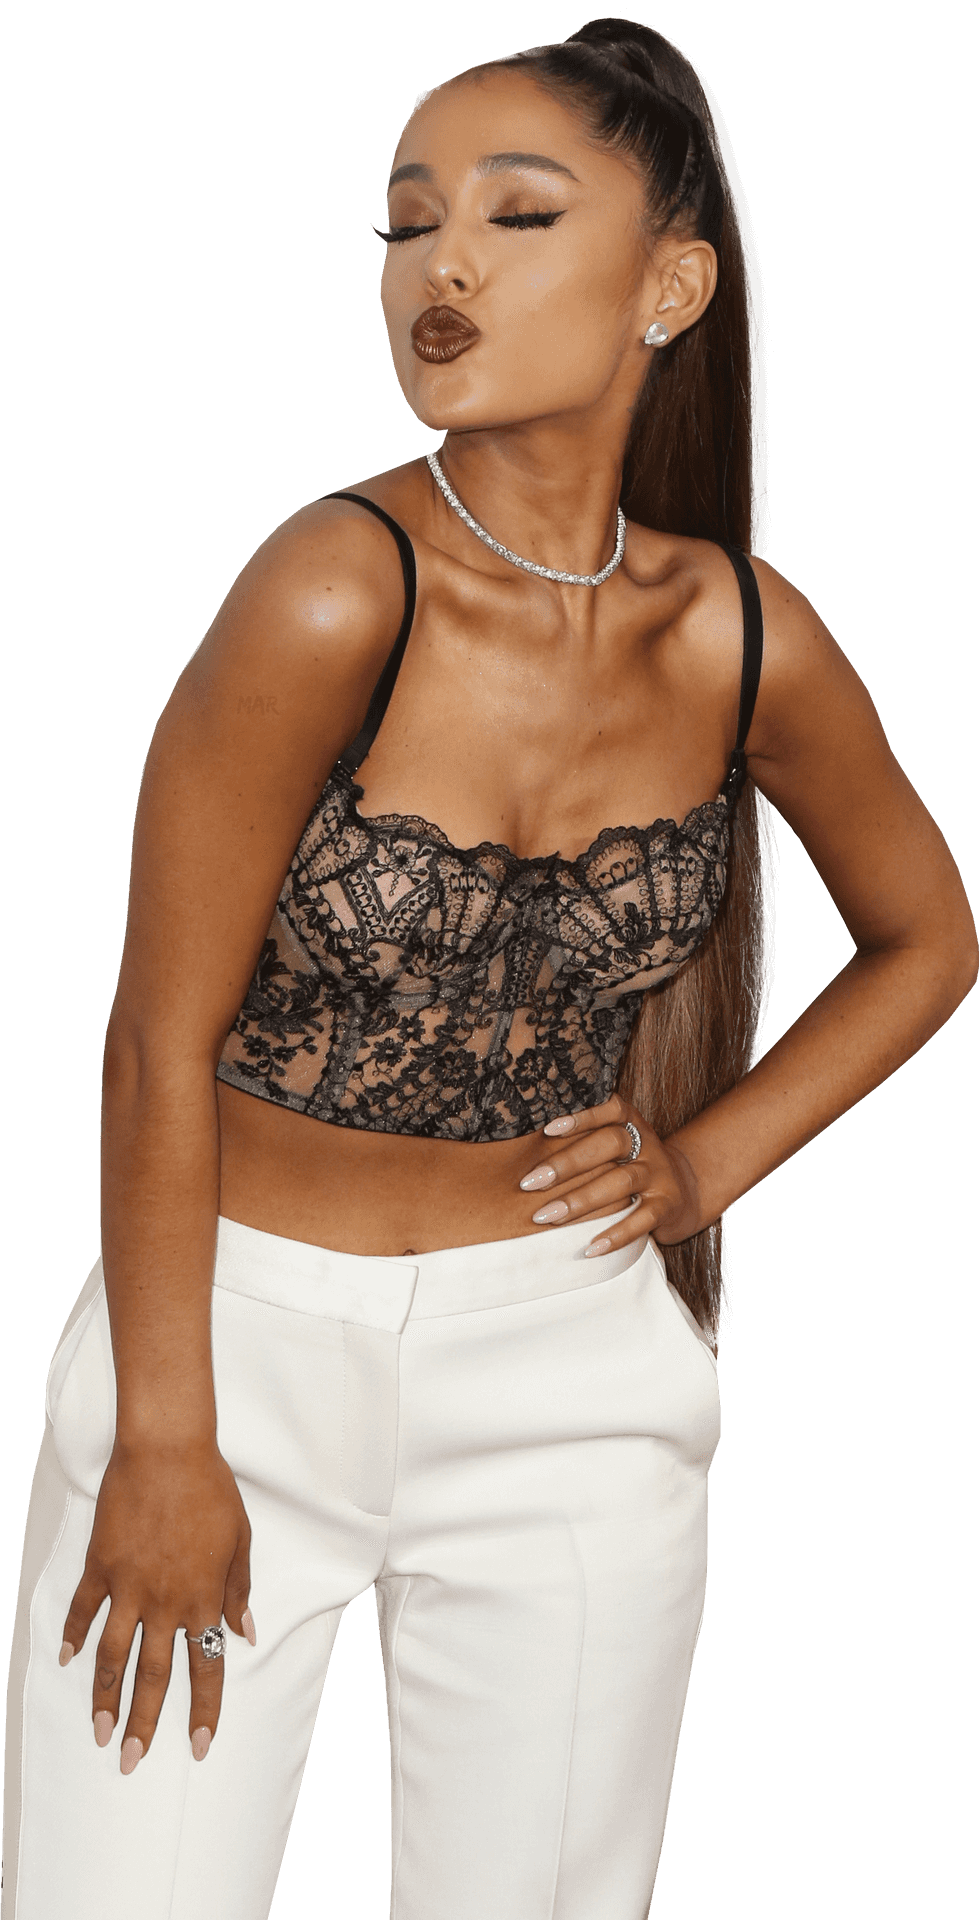 Ariana Grande: White Lace Bralet